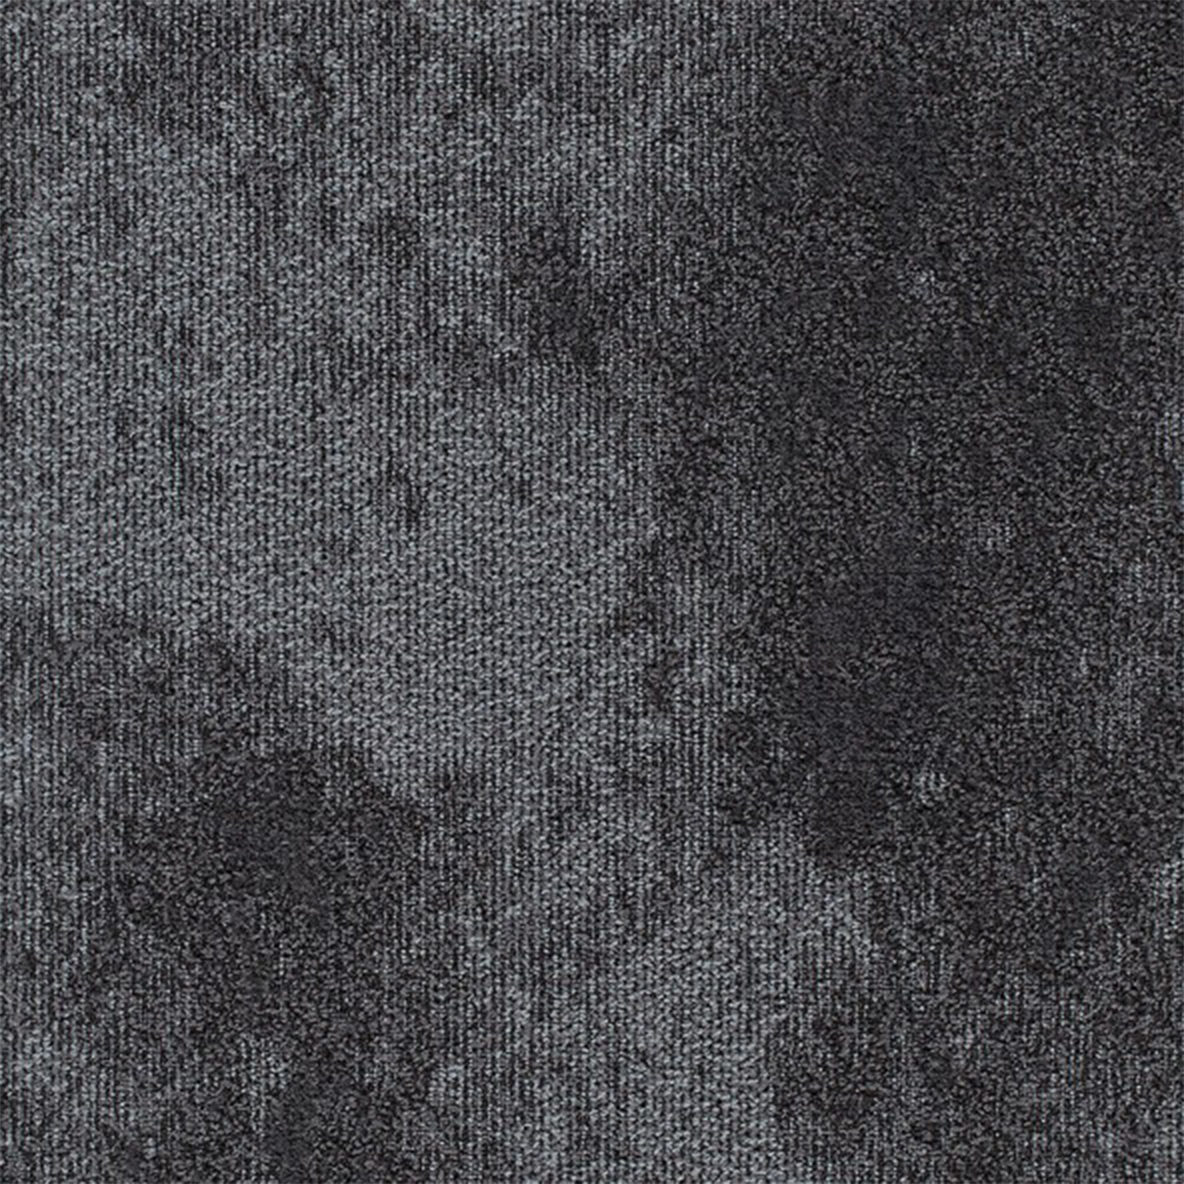 High Tide Commercial Carpet Tile .31 Inch x 50x50 cm per Tile volcanic close up